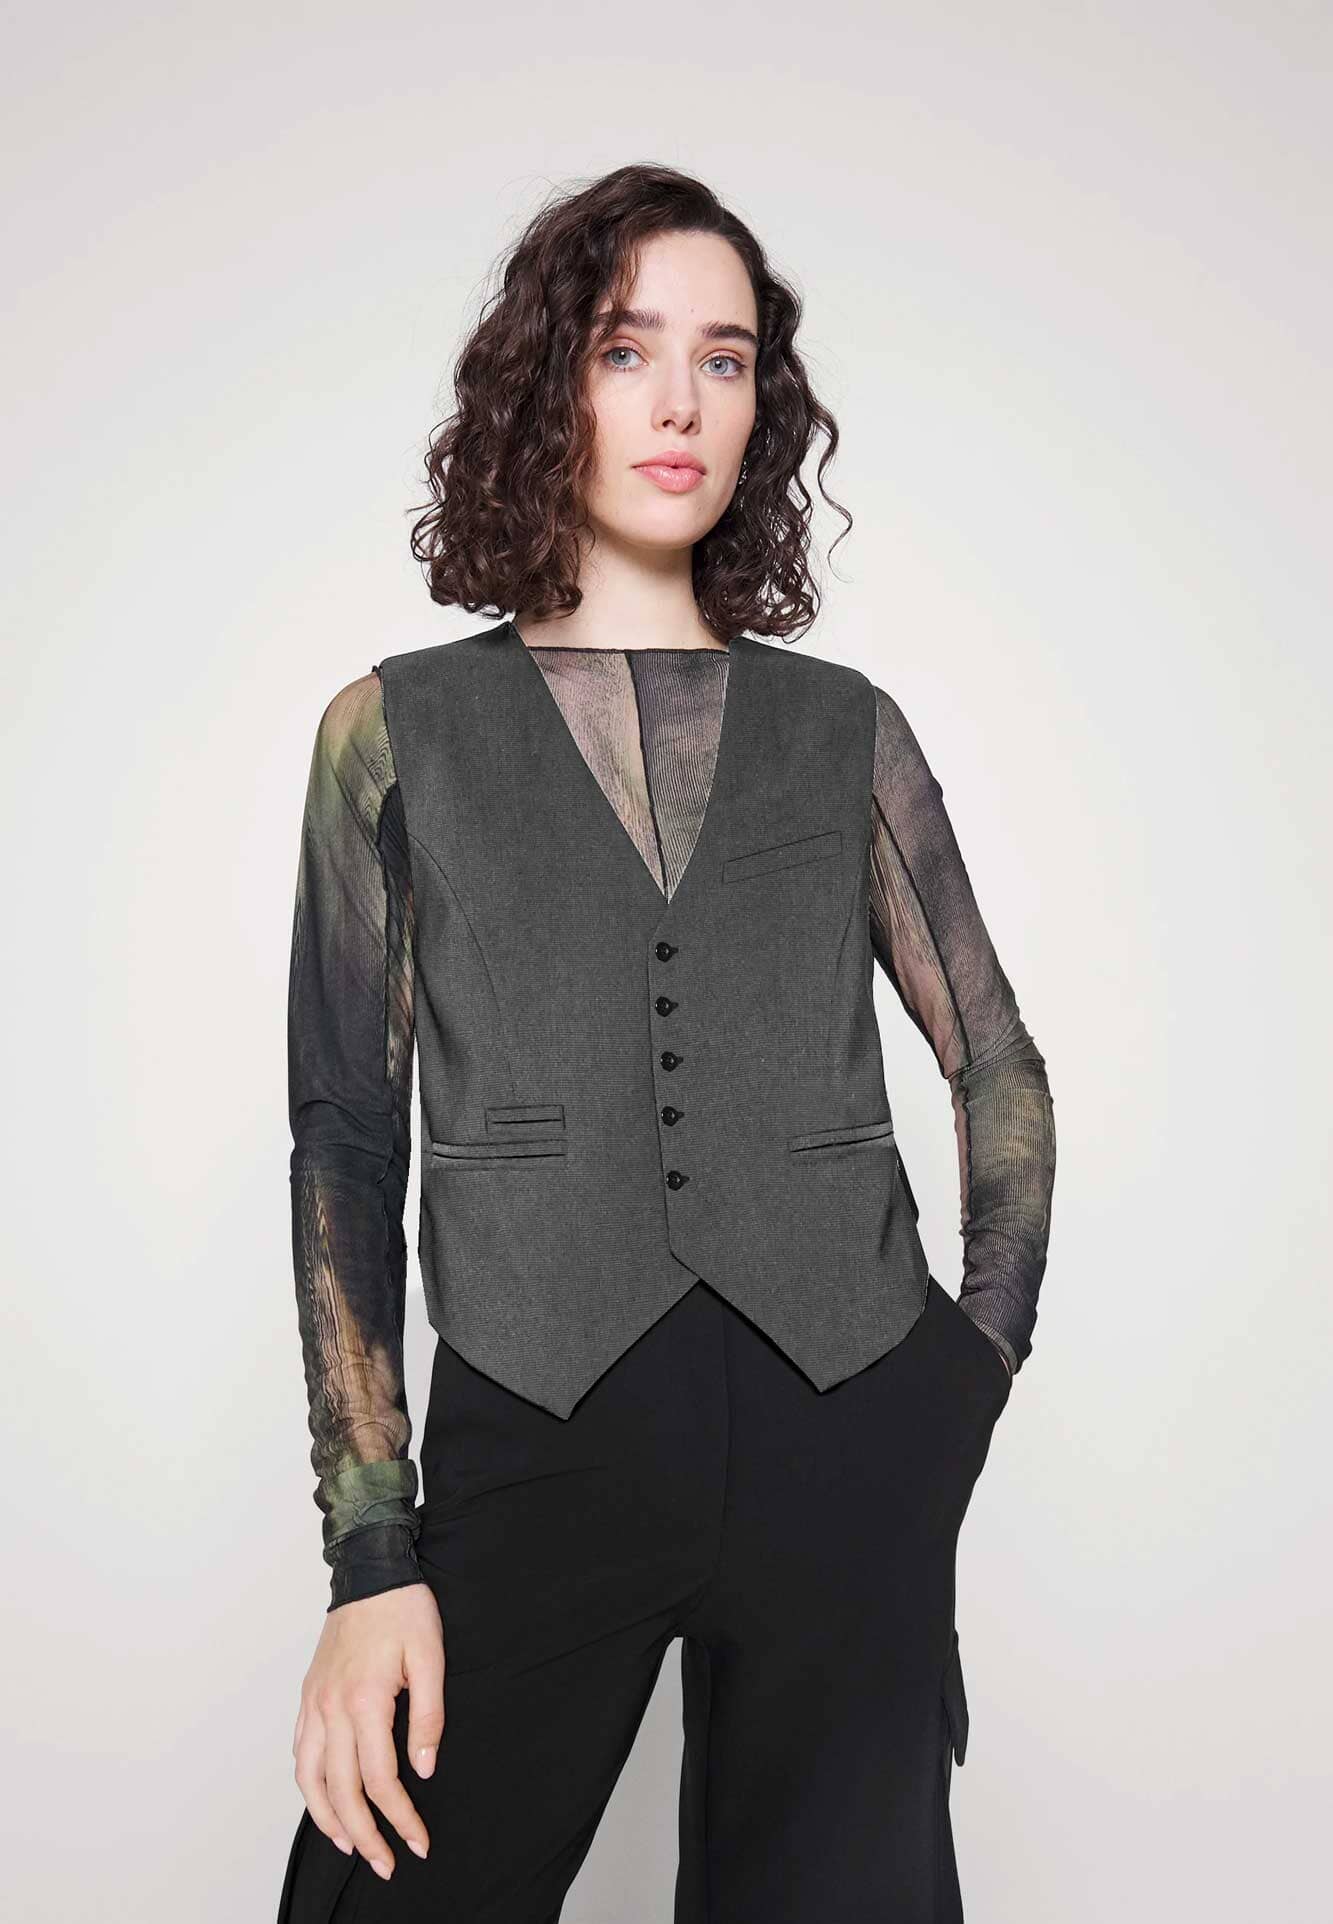 HM Women's Boras Slim Fit Design Waist Coat Women's Waistcoat First Choice XS-42 